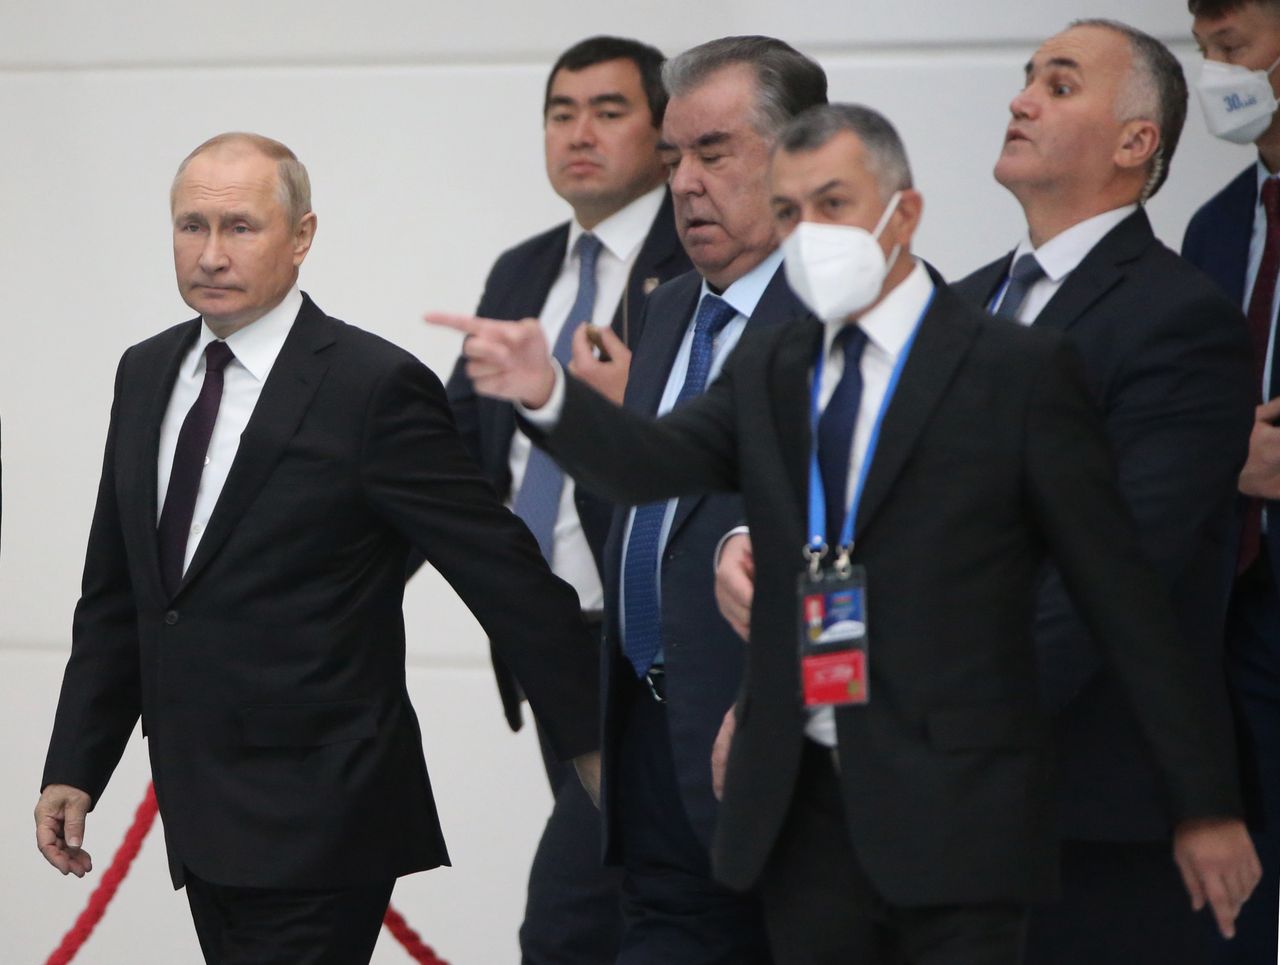 Putin's mandate renewed amid strict COVID protocols for inauguration